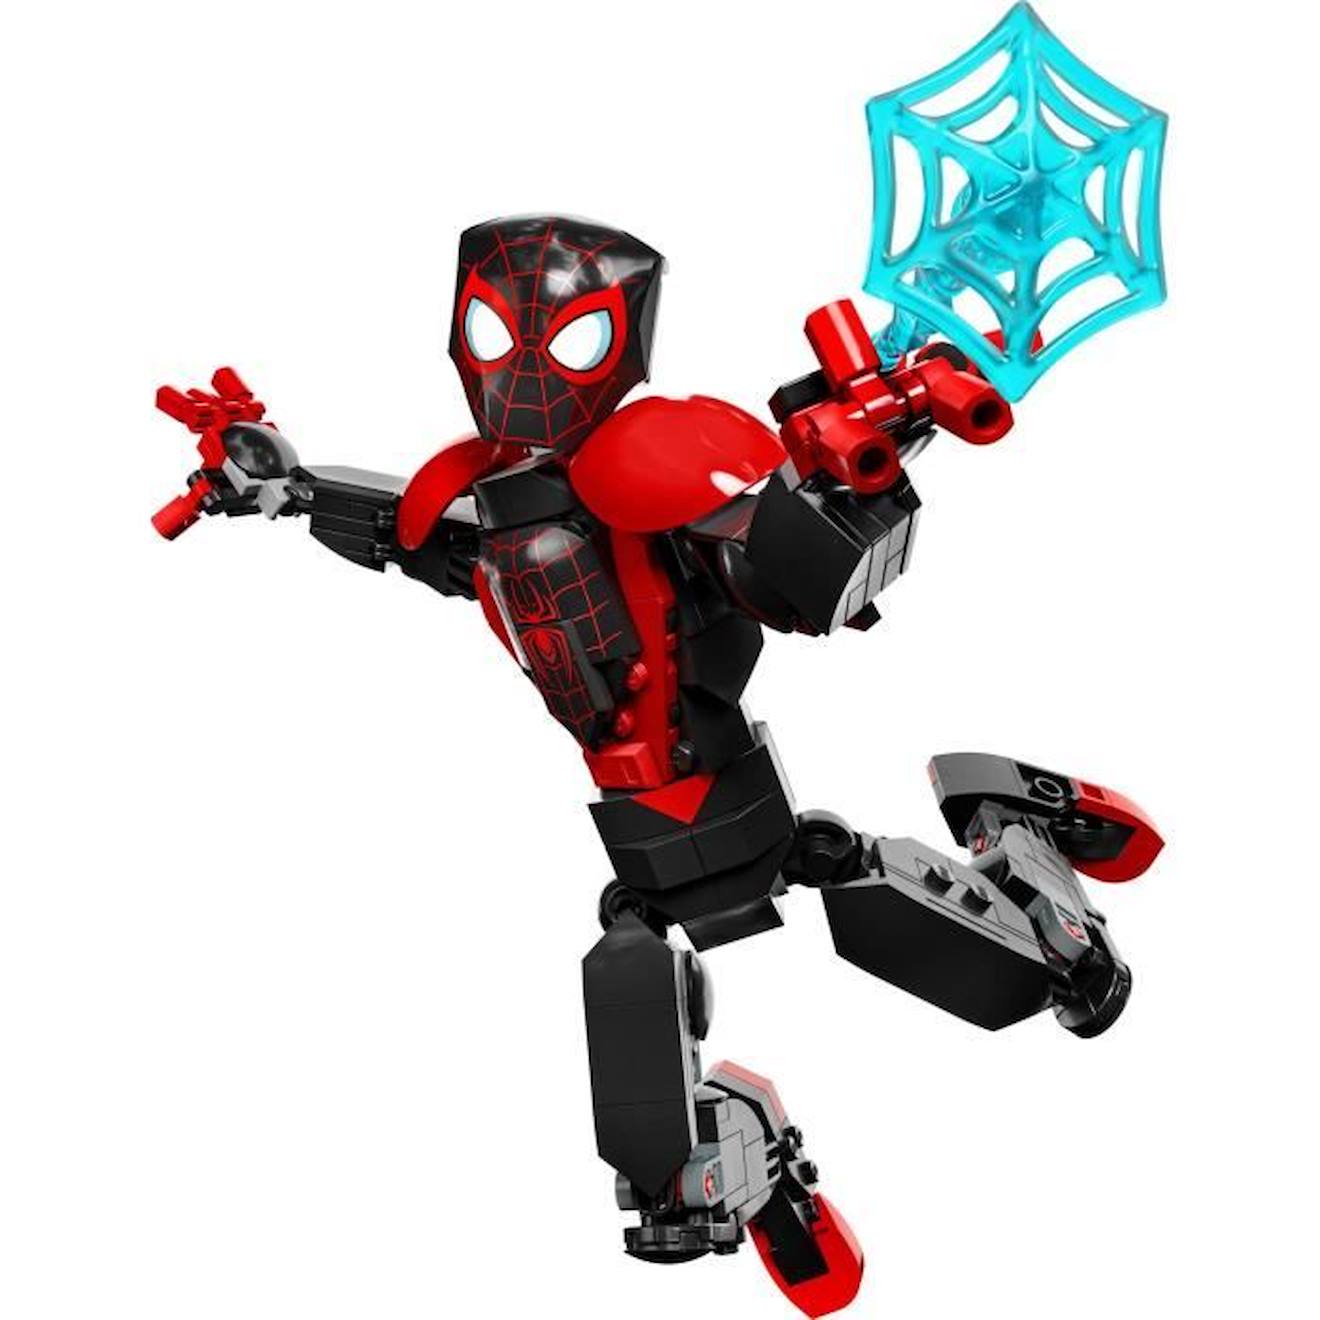 https://media.vertbaudet.fr/Pictures/vertbaudet/323036/lego-marvel-76225-la-figurine-de-miles-morales-jouet-super-heros-cadeau-spider-man.jpg